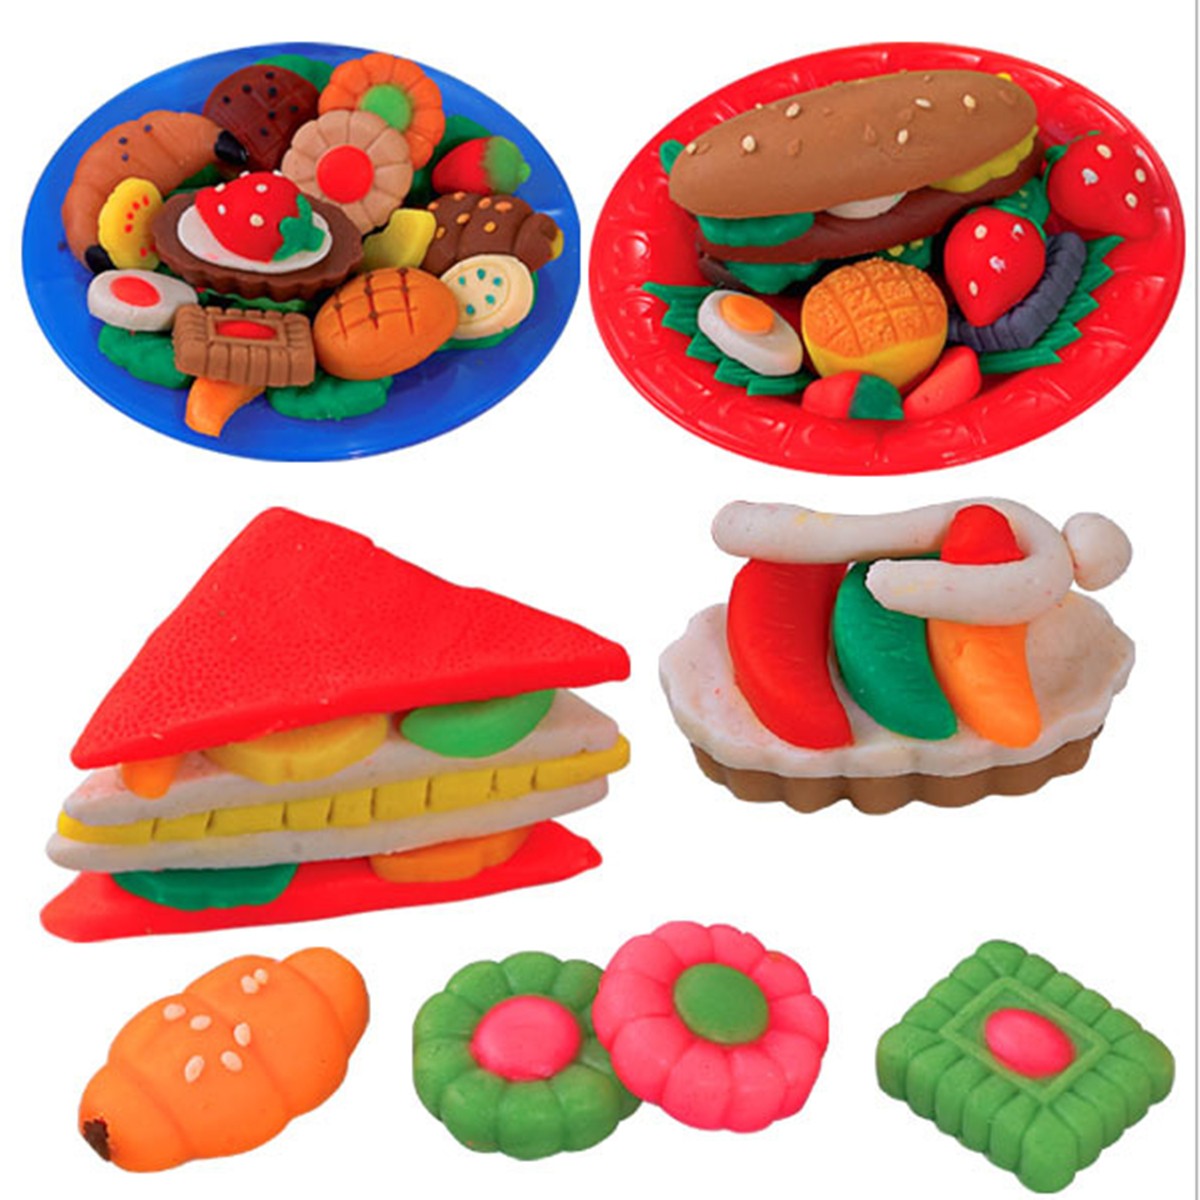 

Play Dough Mold Set Healthy Sandwich Mode Soft Clay Plasticine Toys